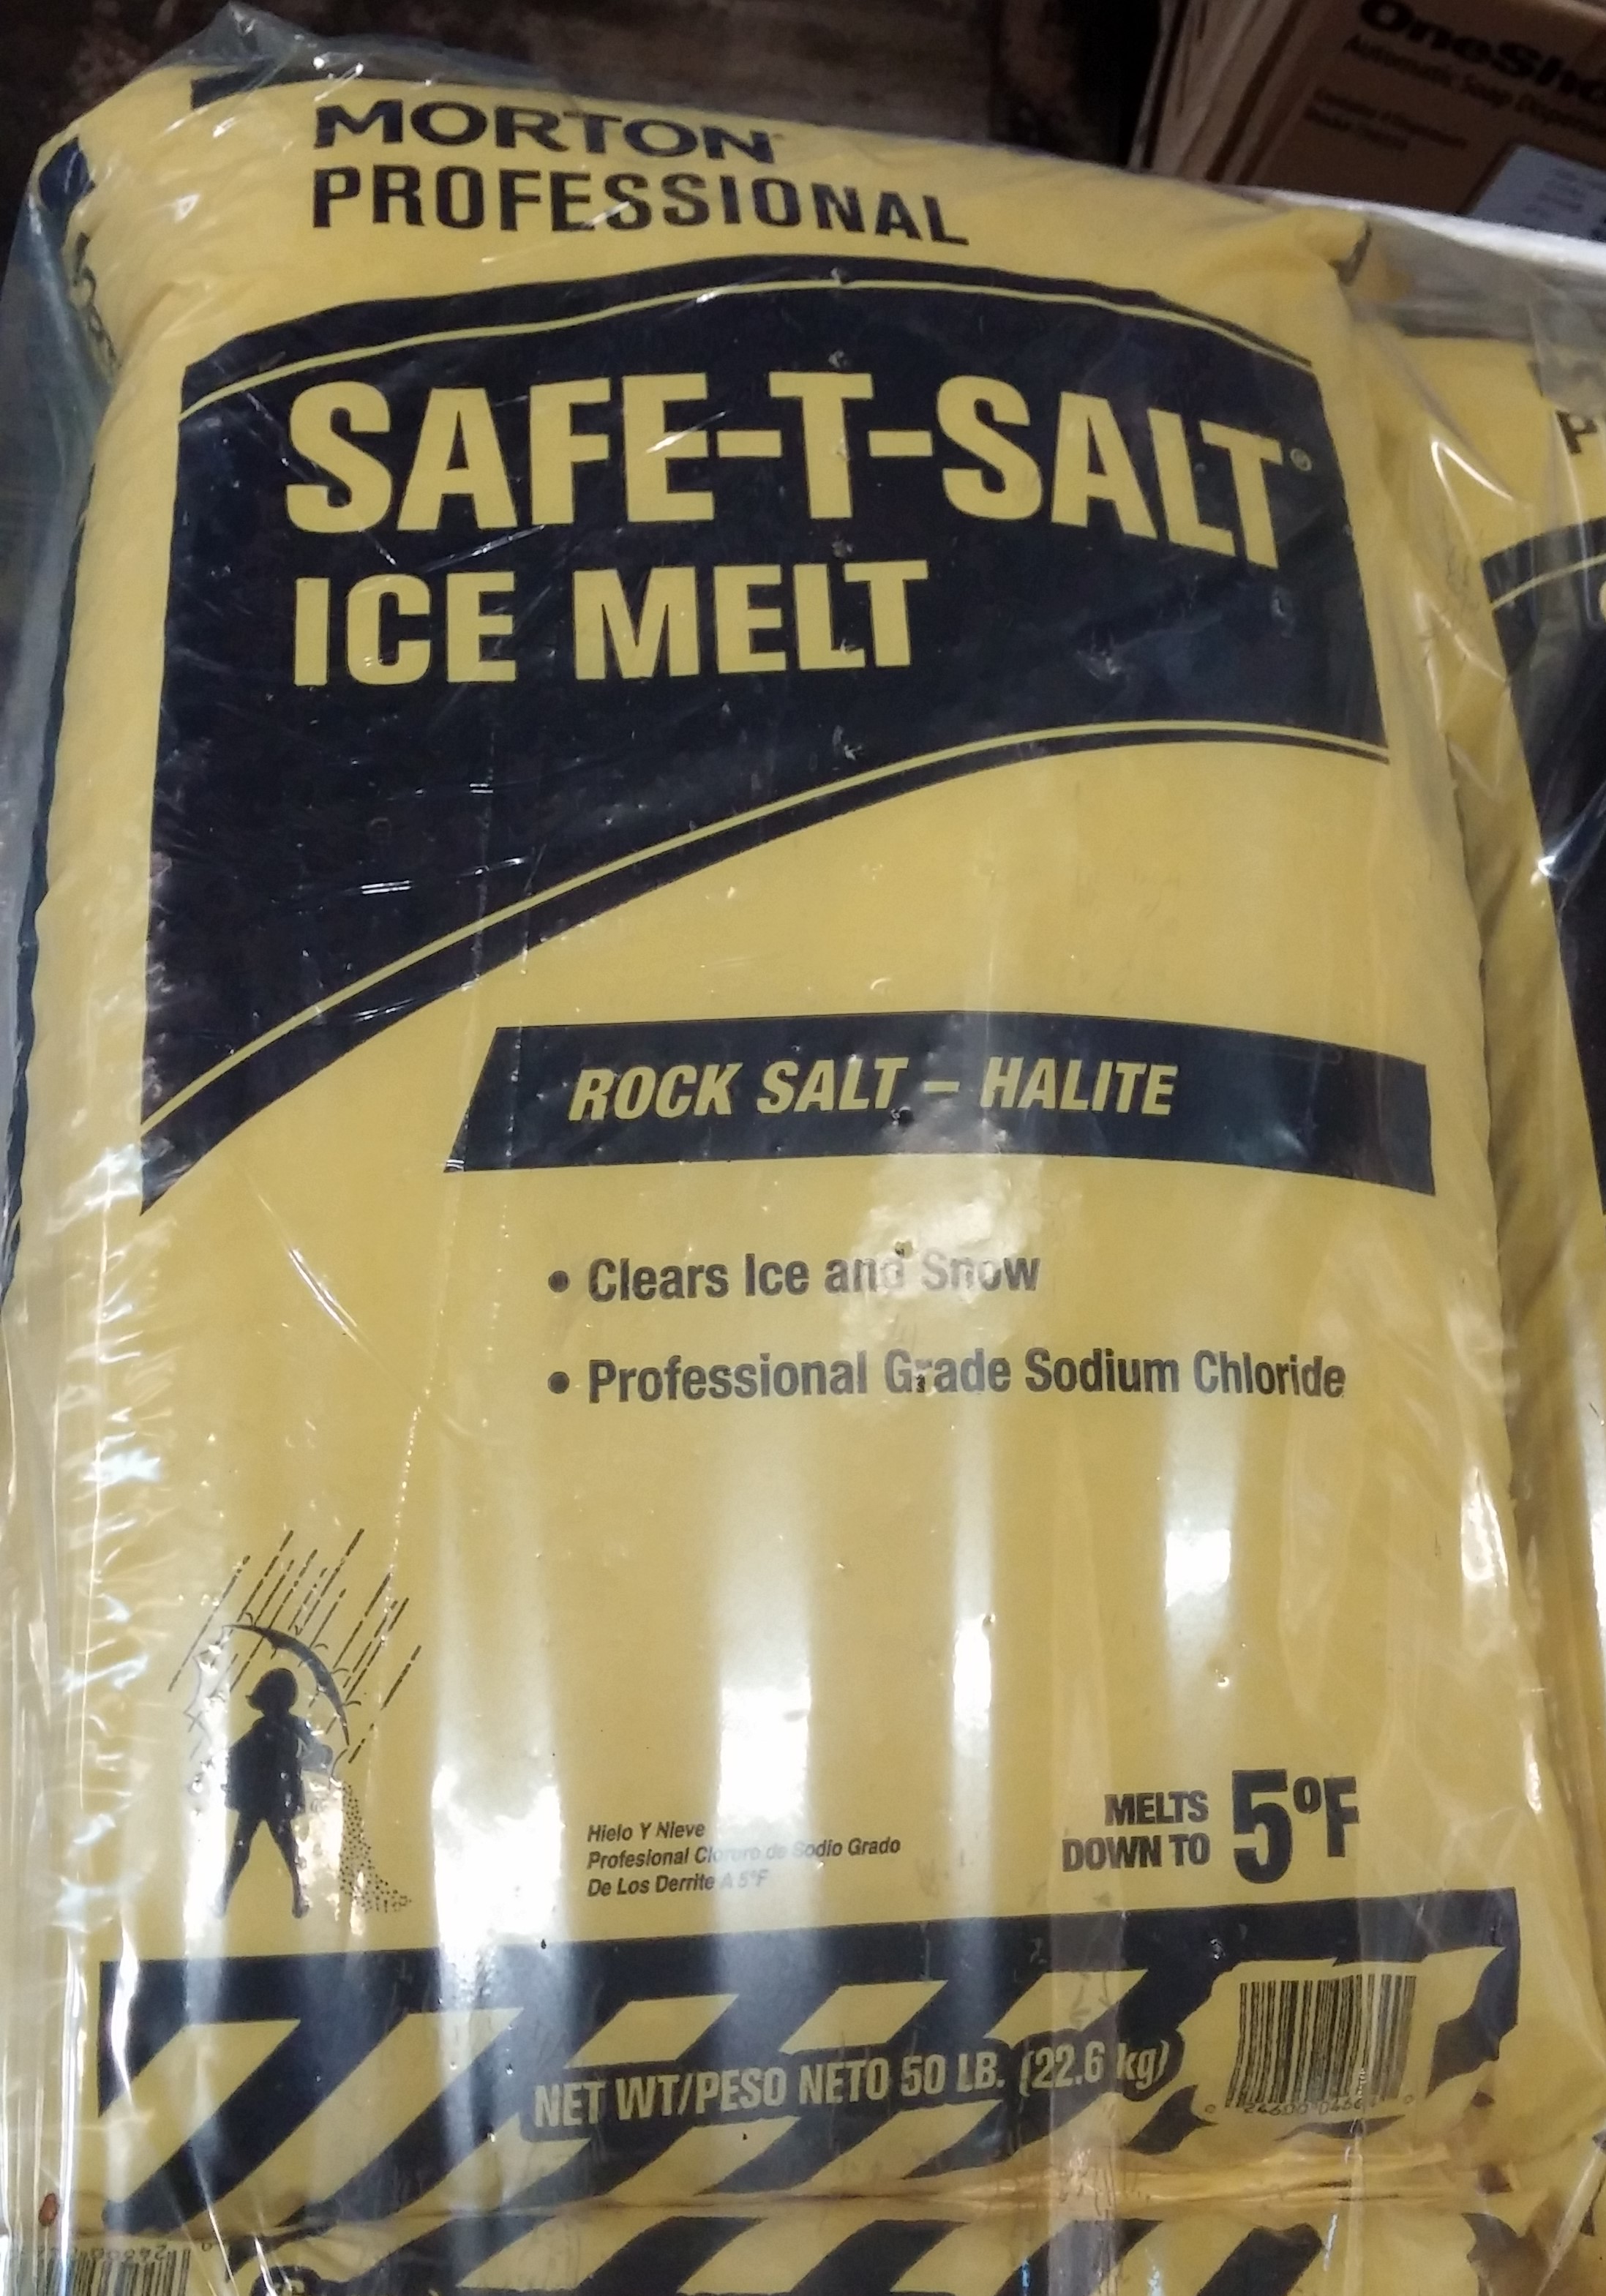 50# BAG DE-ICING SALT
WINTERMELT 49/PALLET (ROCK
SALT-HALITE/MORTON)